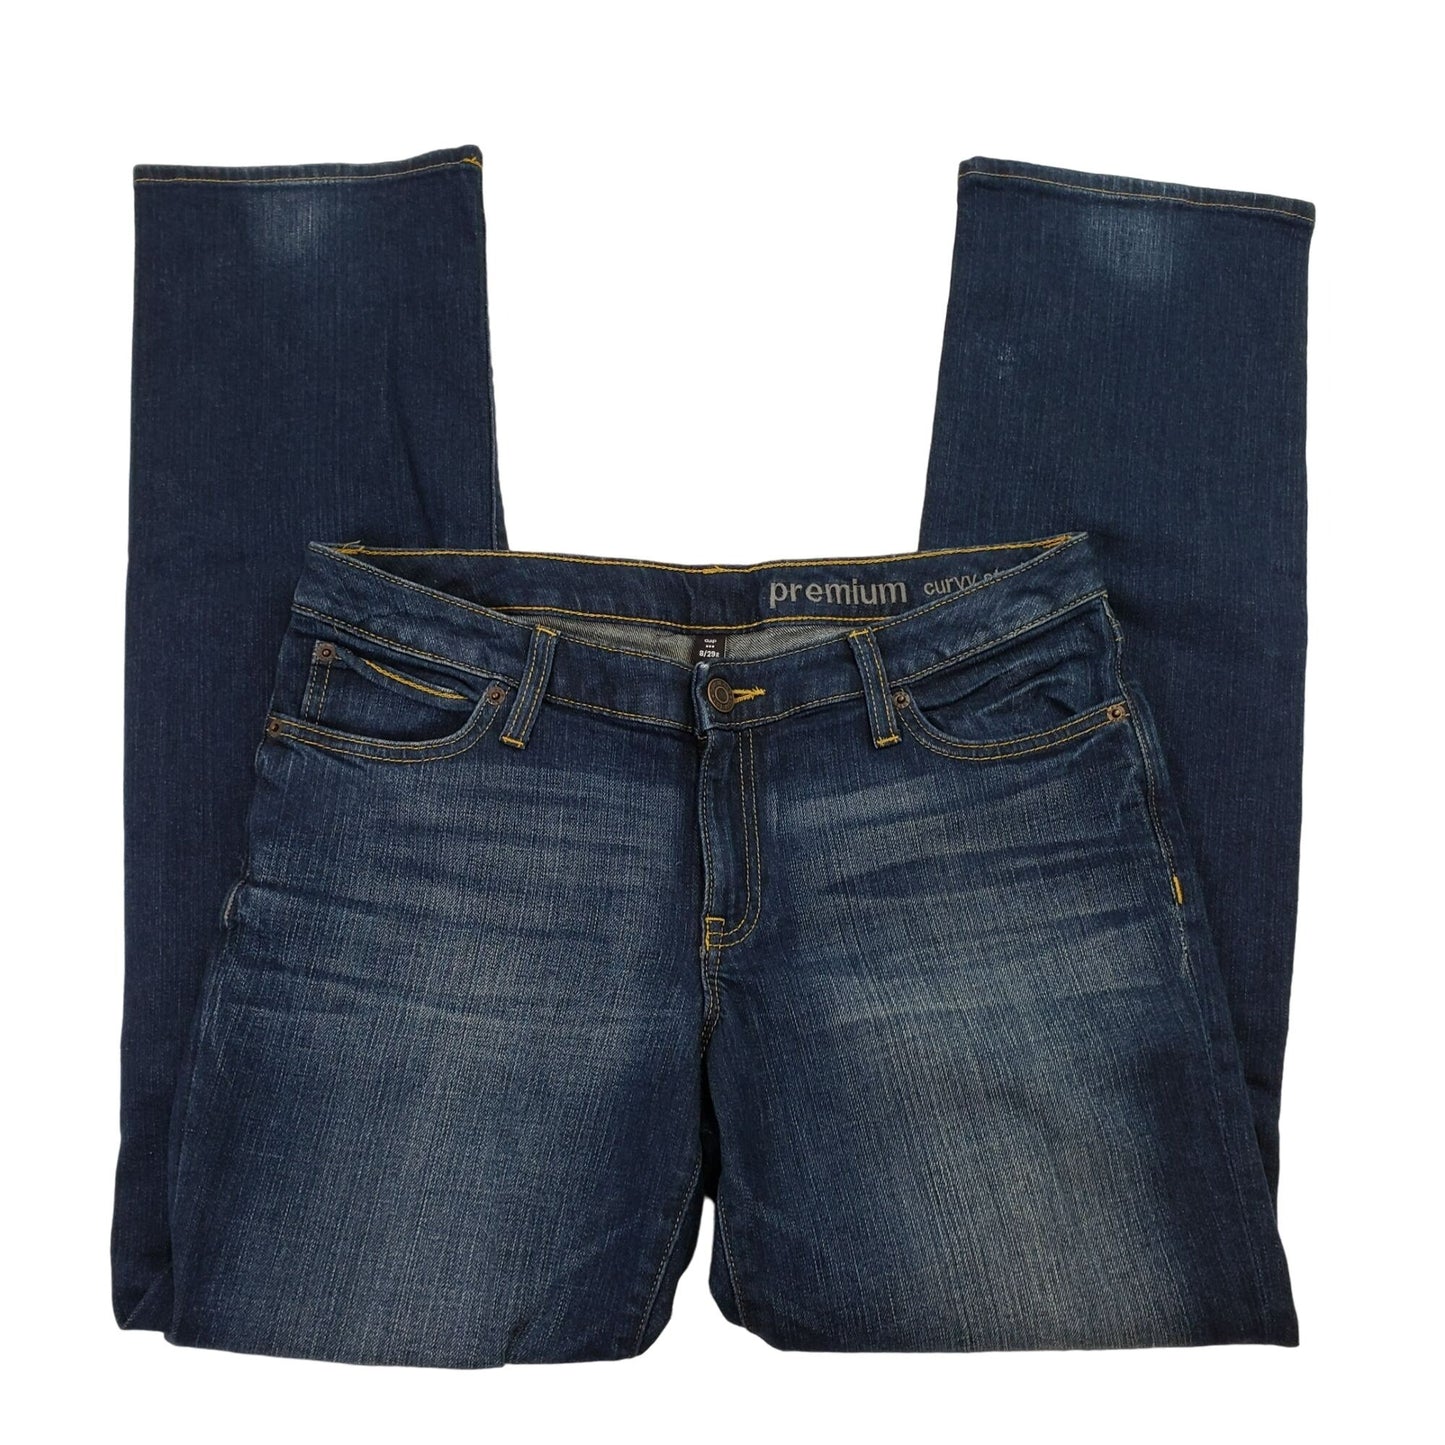 Gap Premium Curvy Straight Jeans in True Blue Wash Size 8